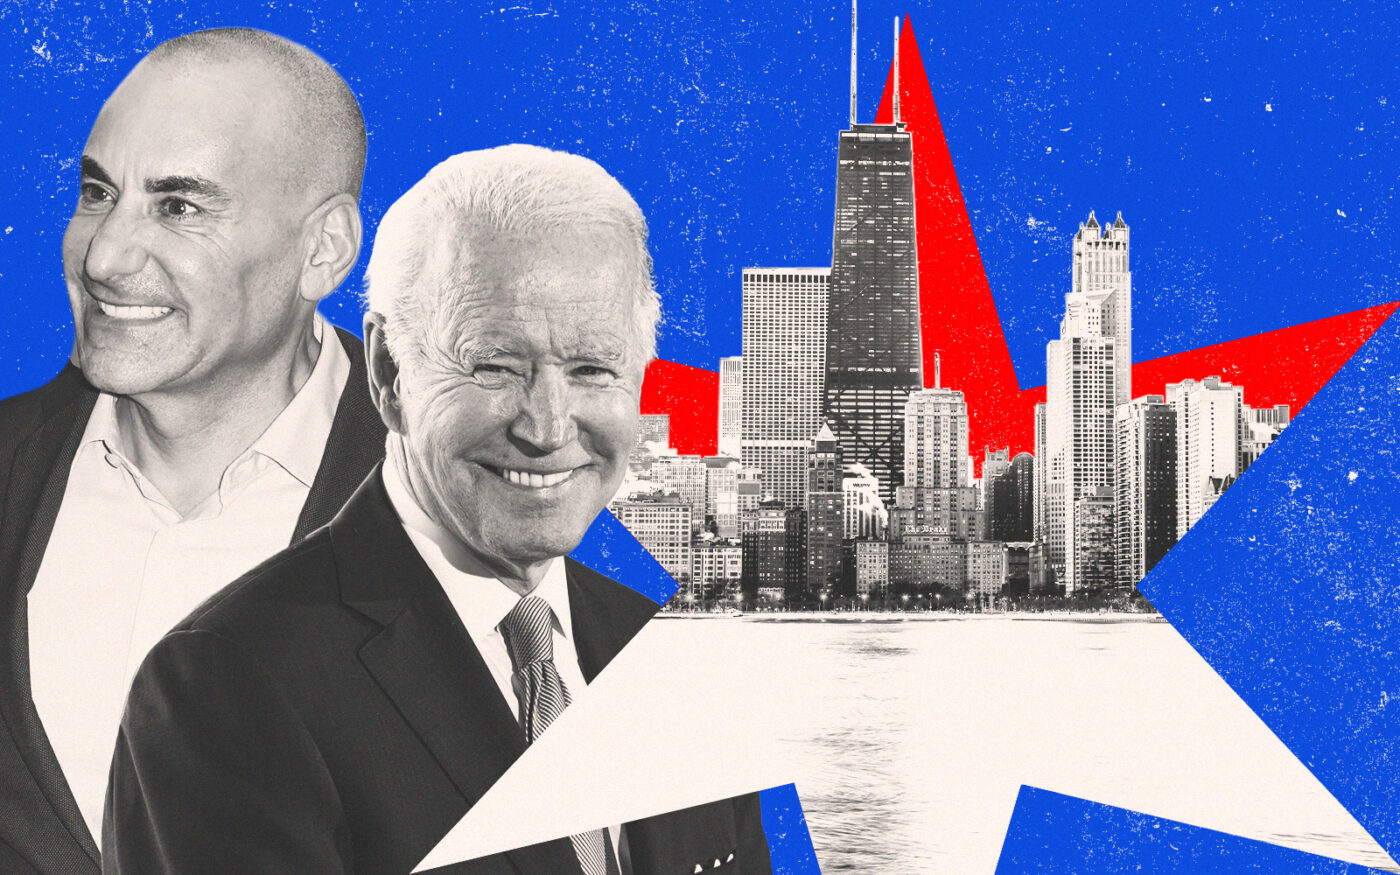 Illinois Restaurant Association's Sam Toia and President Joe Biden with the Chicago skyline